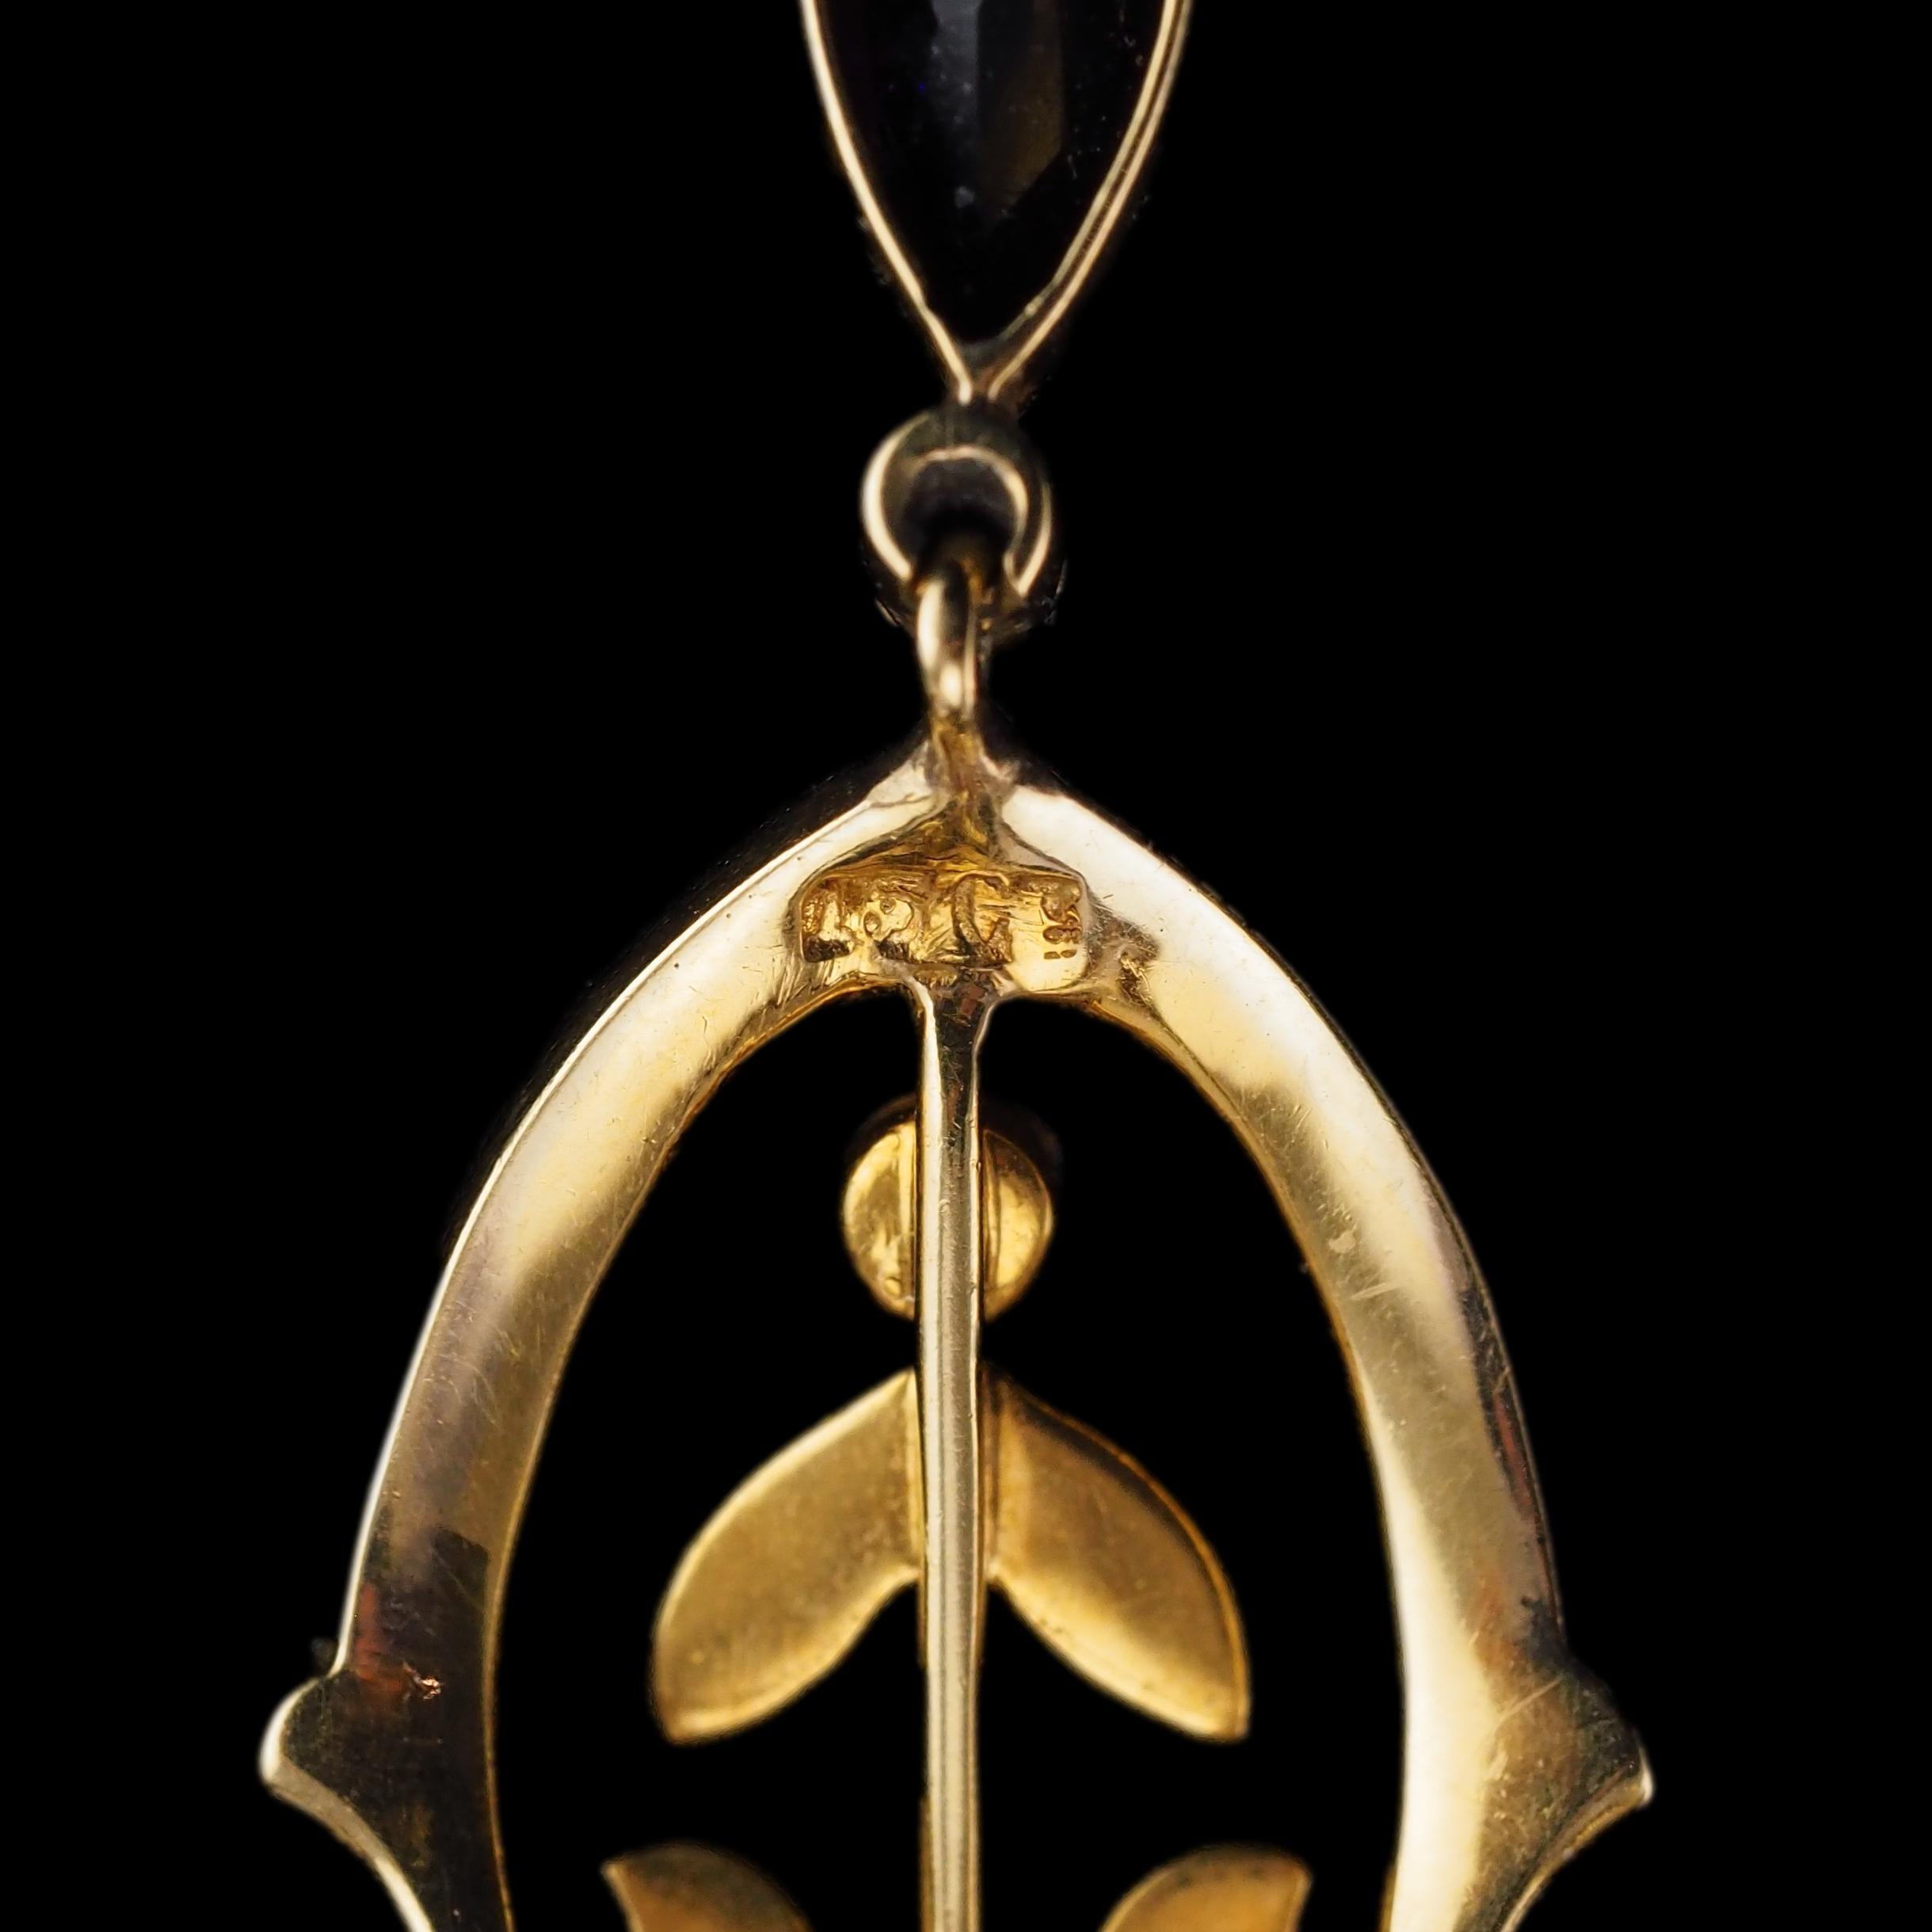 Antique Edwardian Amethyst & Seed Pearl 15K Gold Pendant Necklace Art Nouveau  For Sale 4